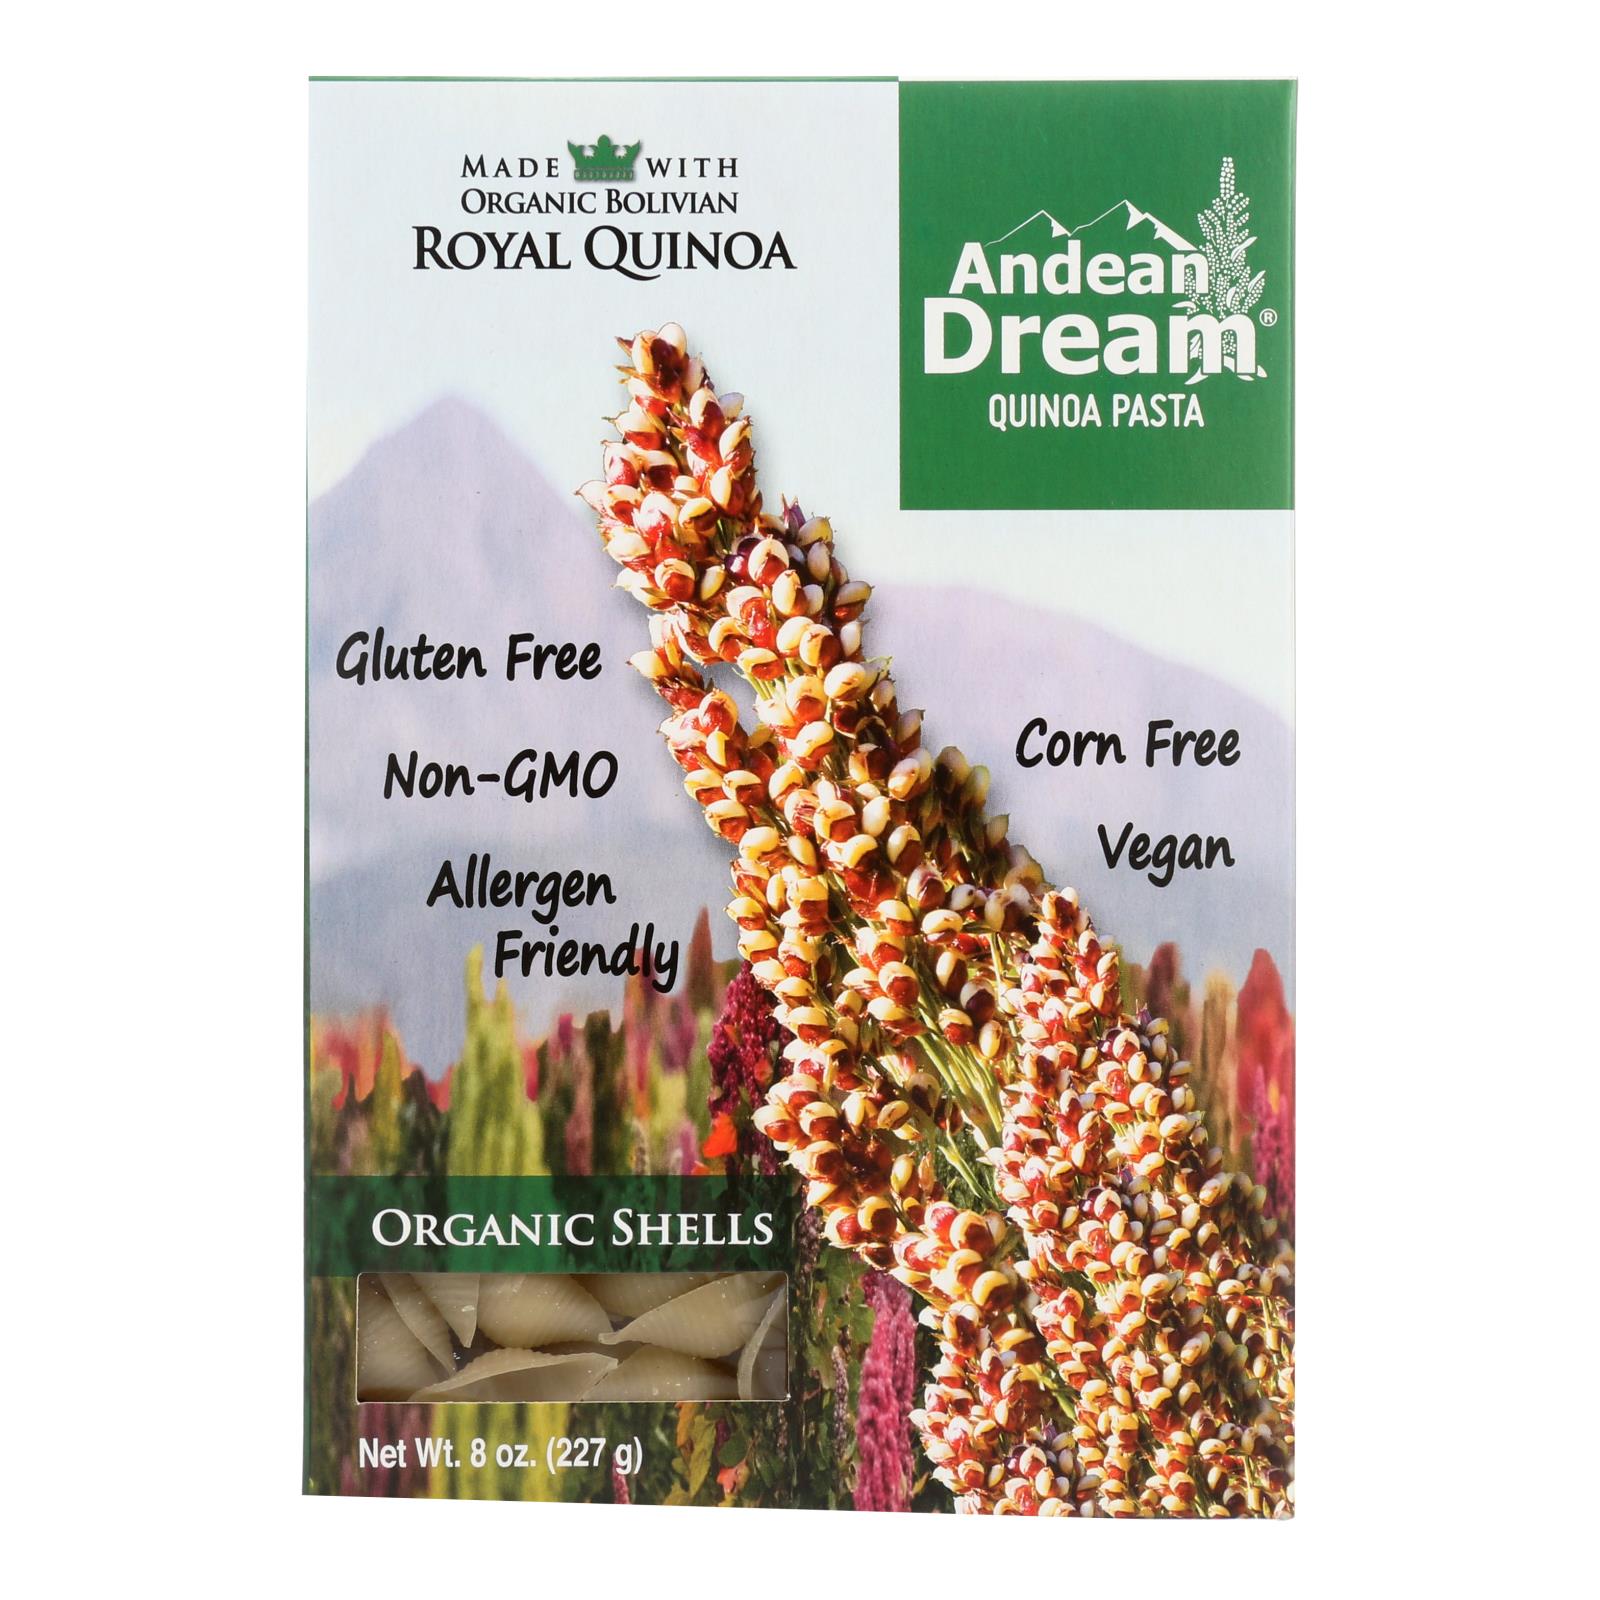 Andean Dream, Andean Dream Gluten Free Organic Shells Quinoa Pasta - Case of 12 - 8 oz. (Pack of 12)